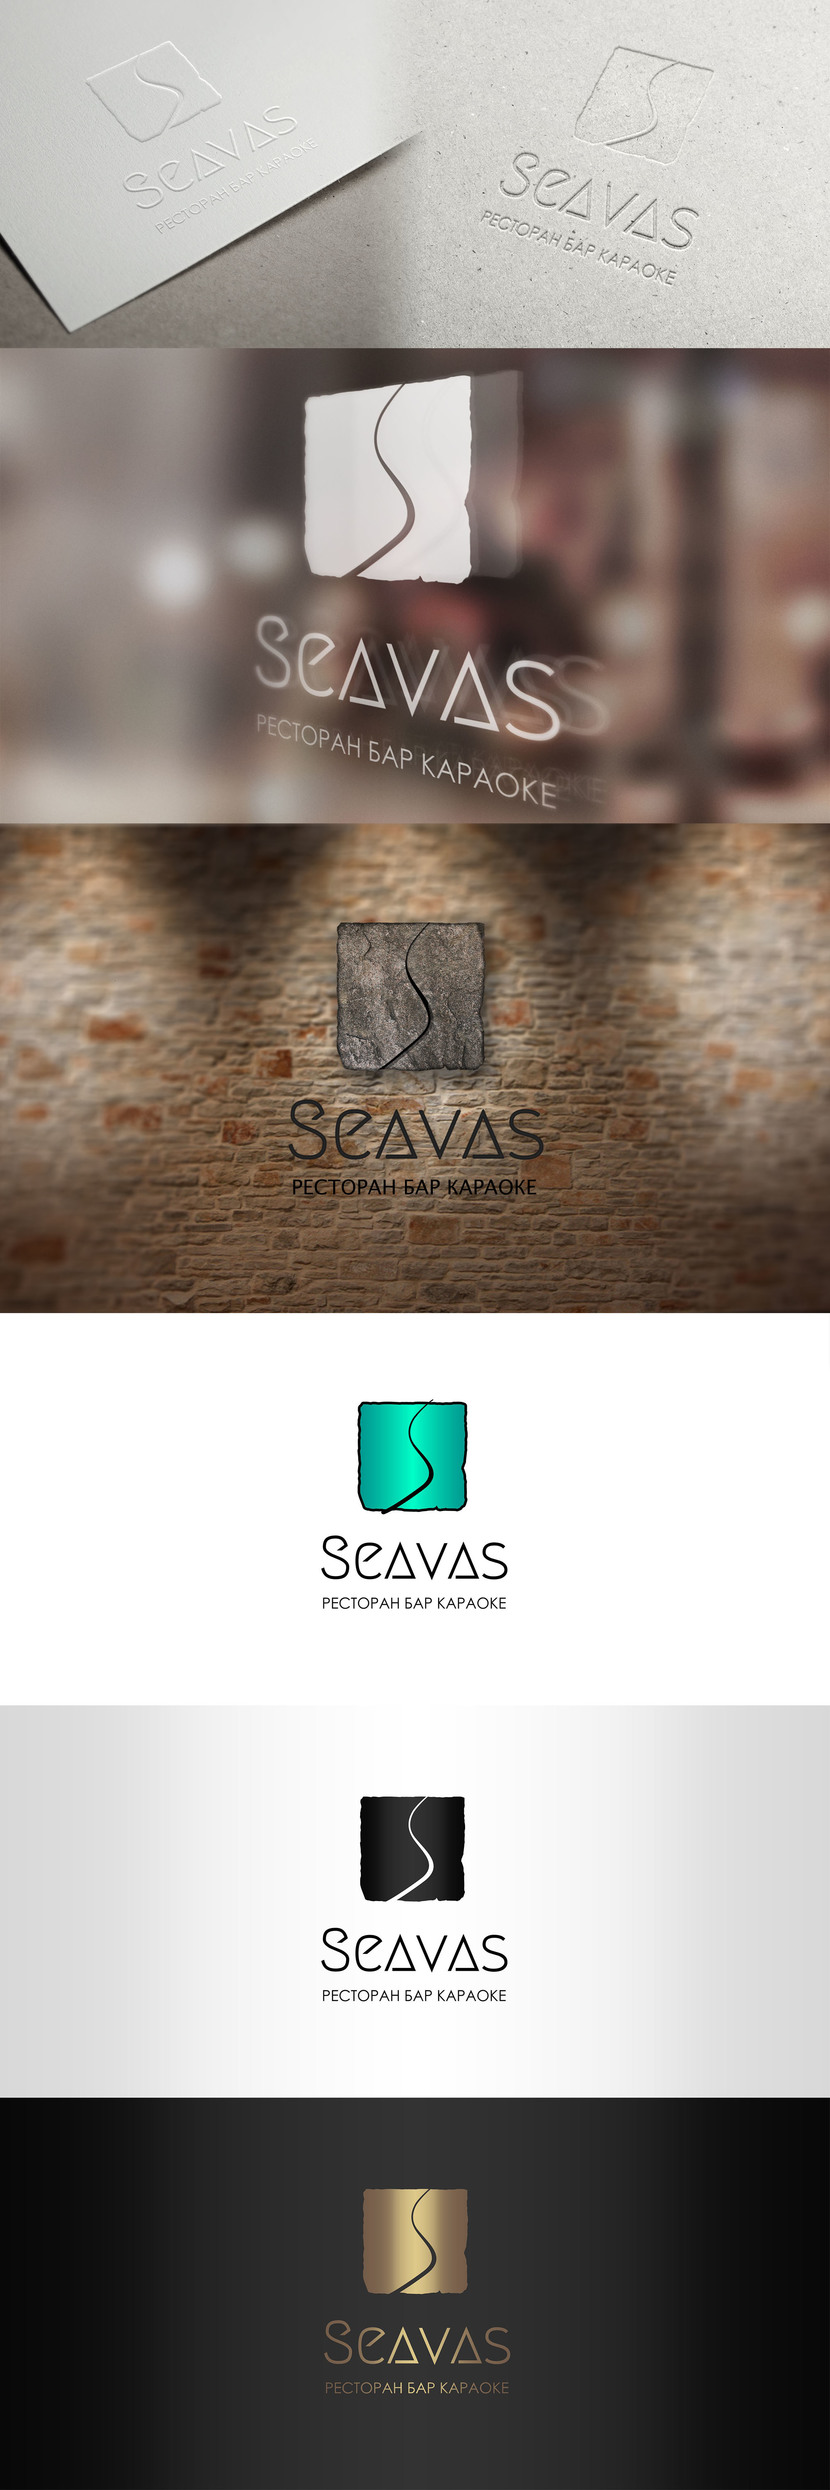 #2 - Разработка логотипа для ресторана Seavas